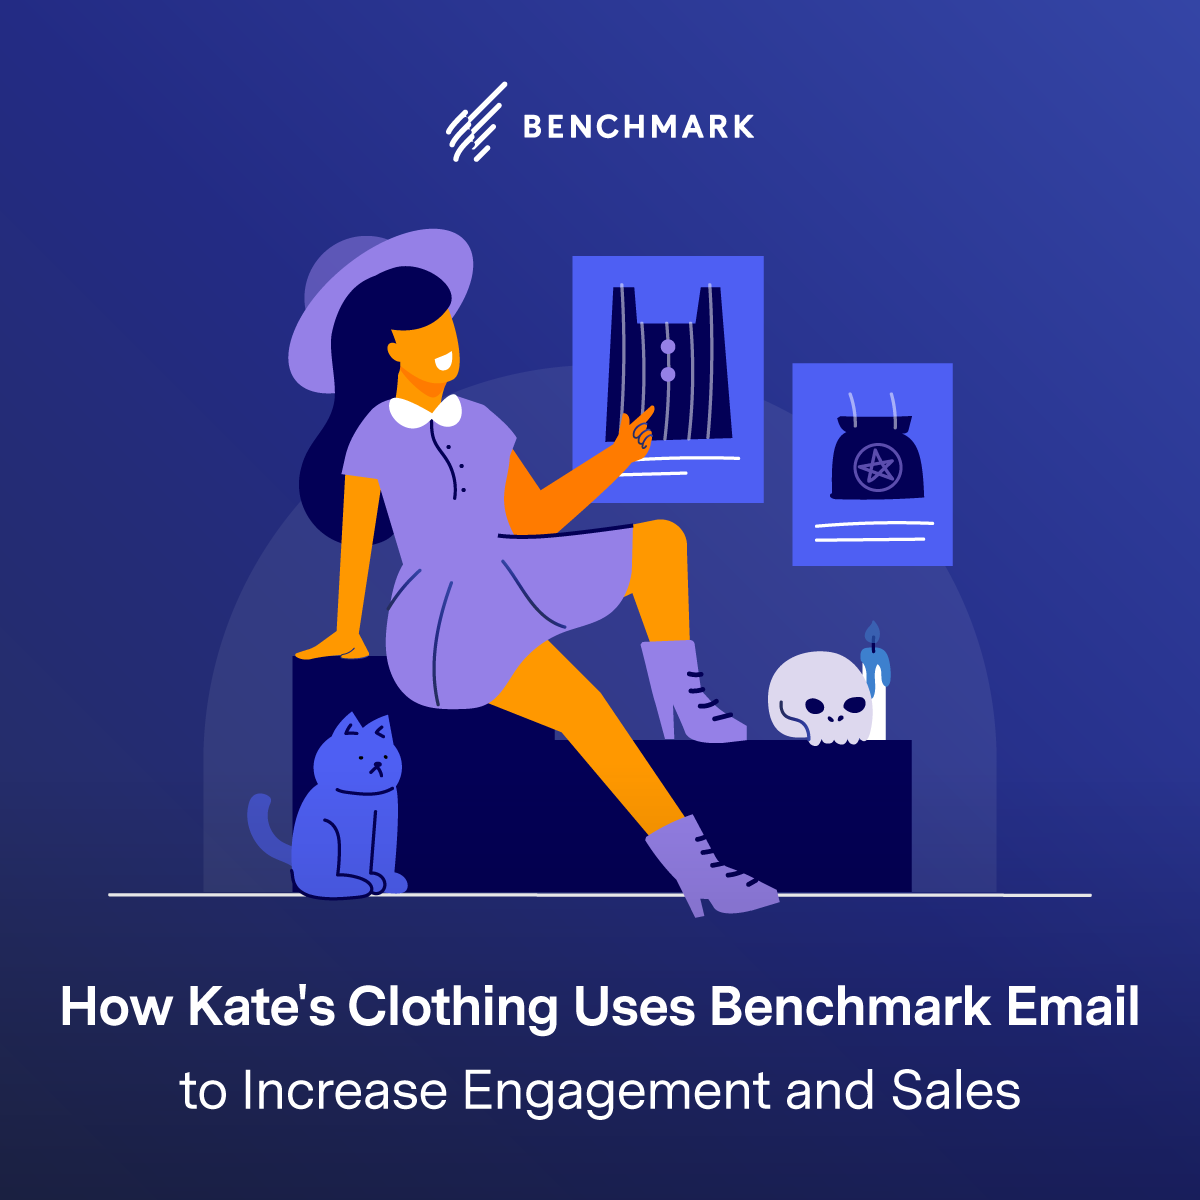 Email Marketing Case Study Benchmark Email Kates Clothing SOCIAL